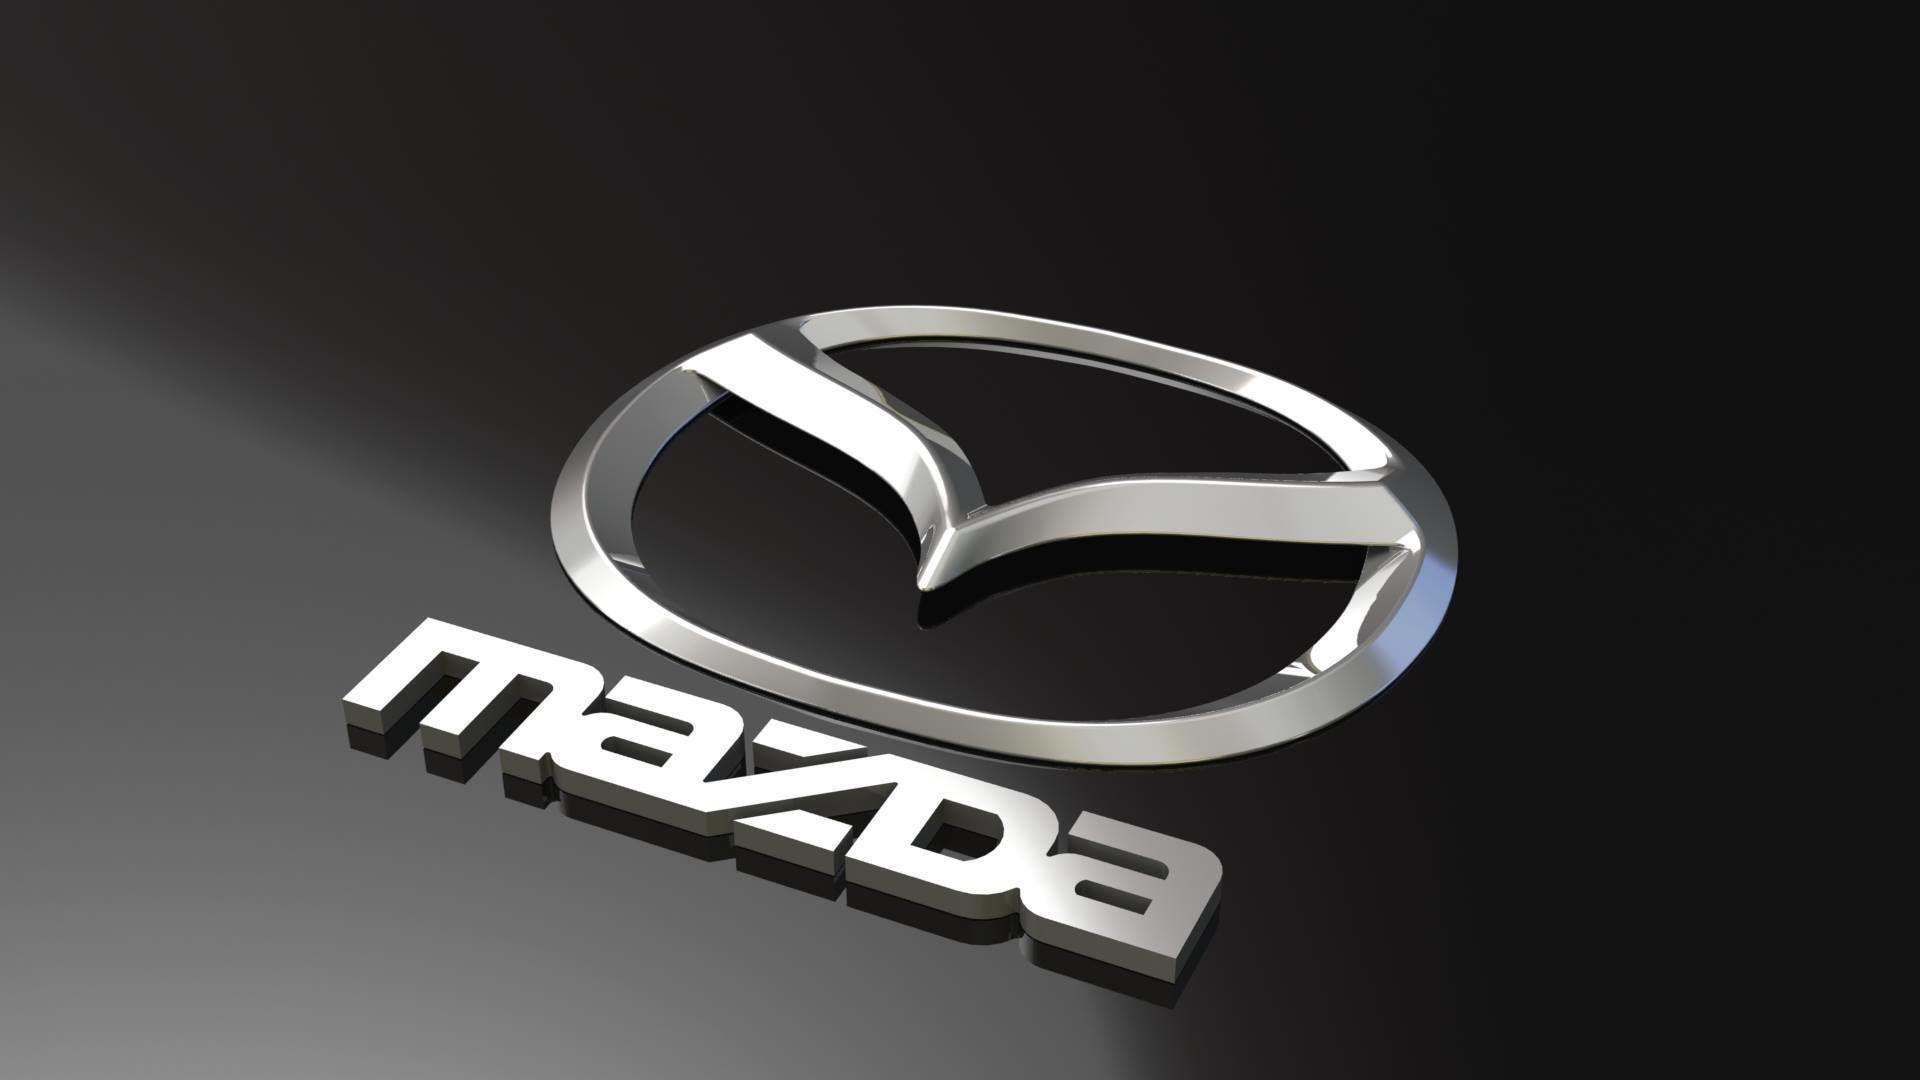 Mazda Car Logo - Mazda Logo】| Mazda Car Logo Design Vector Free Download